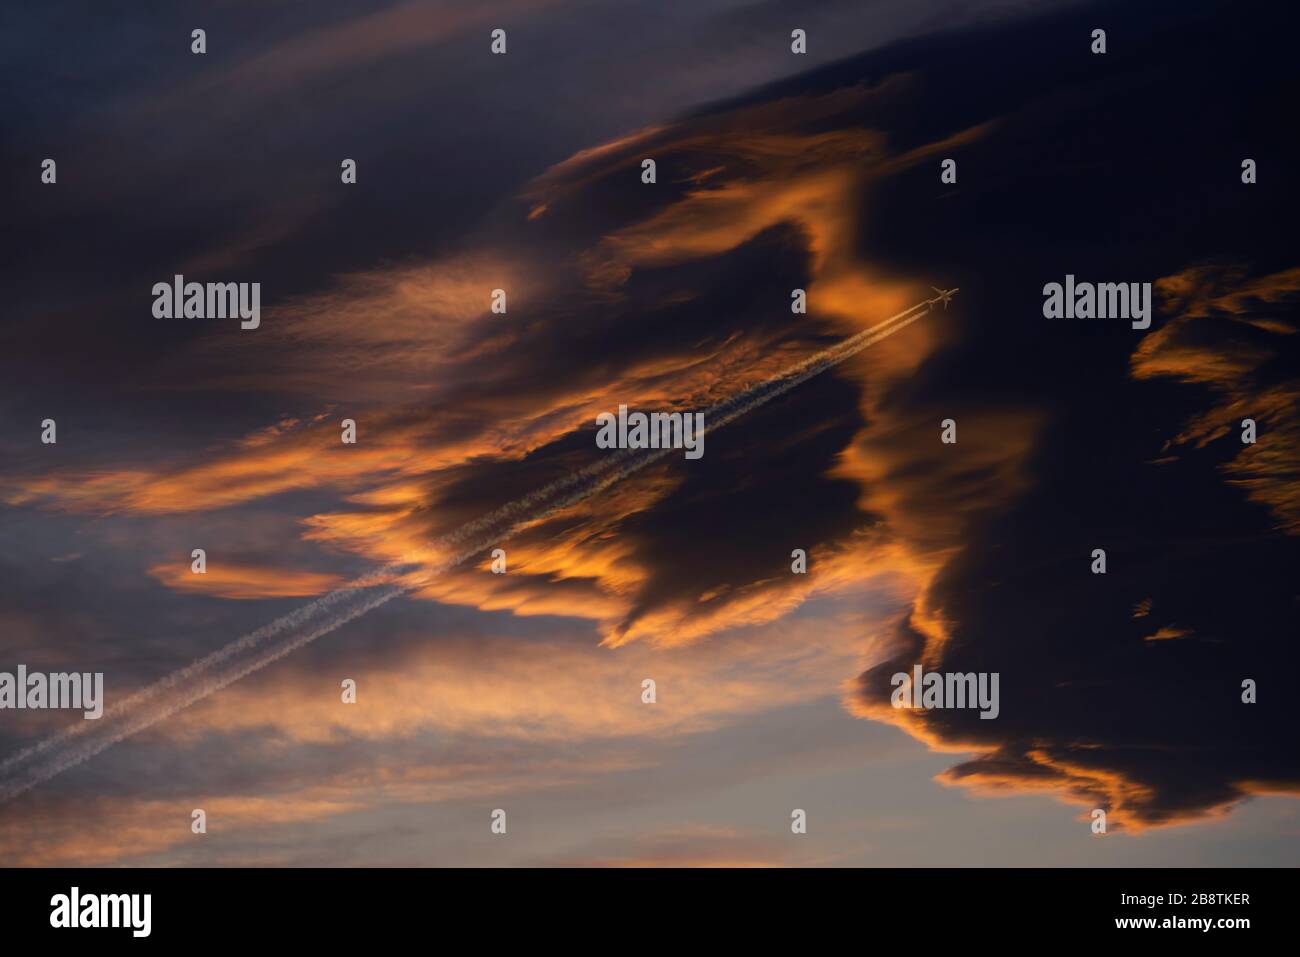 Das kommerzielle Flugzeug fliegt hoch oben am Himmel in dunkle schwarze Wolken. Düstere Atmosphäre. Stockfoto